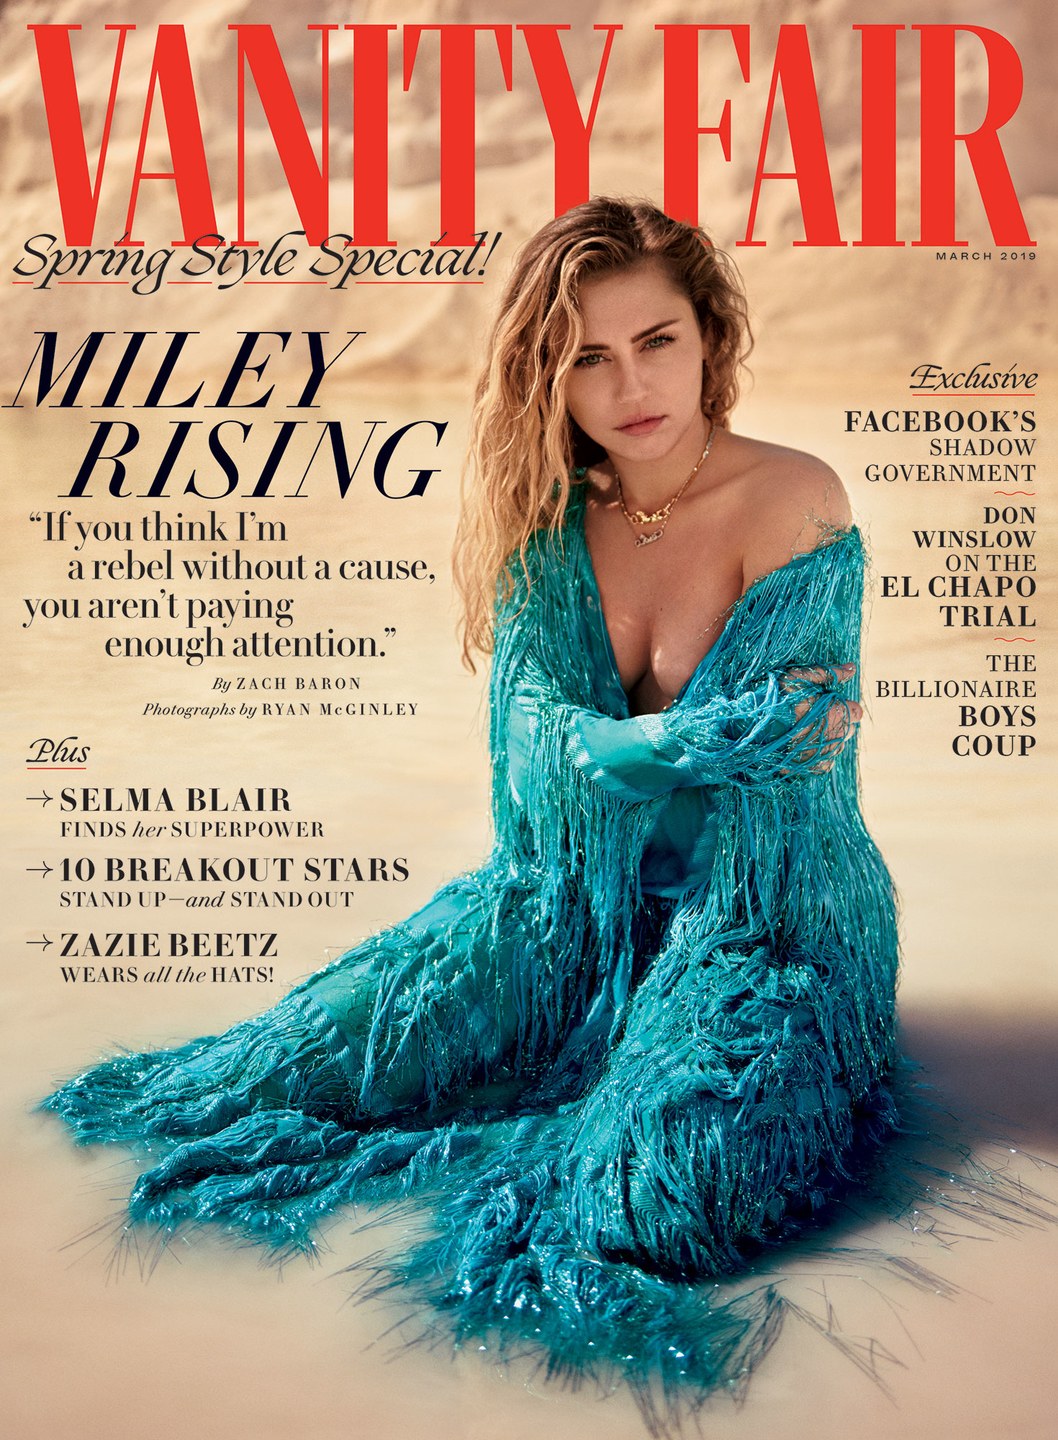 Miley Cyrus by Ryan McGinley Vanity Fair March 2019 Cover.jpg